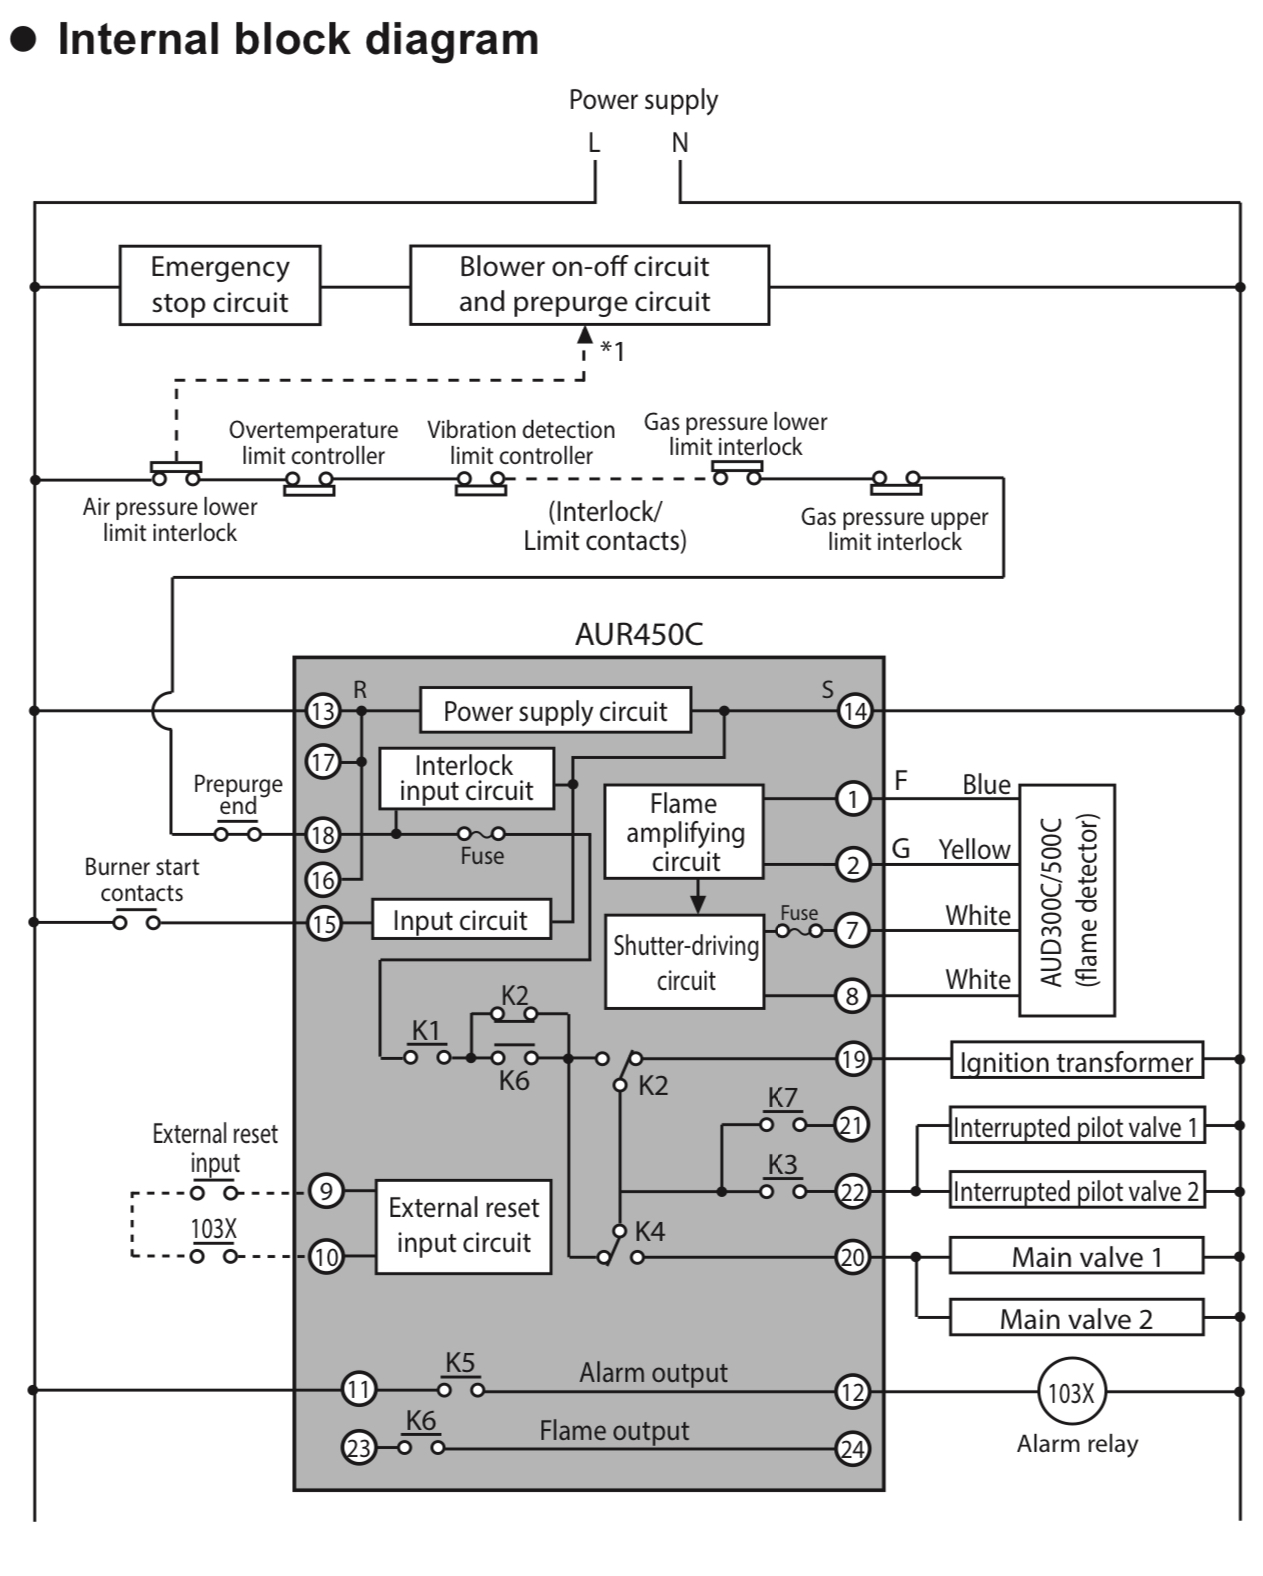 aur450c-internal-block-diagram